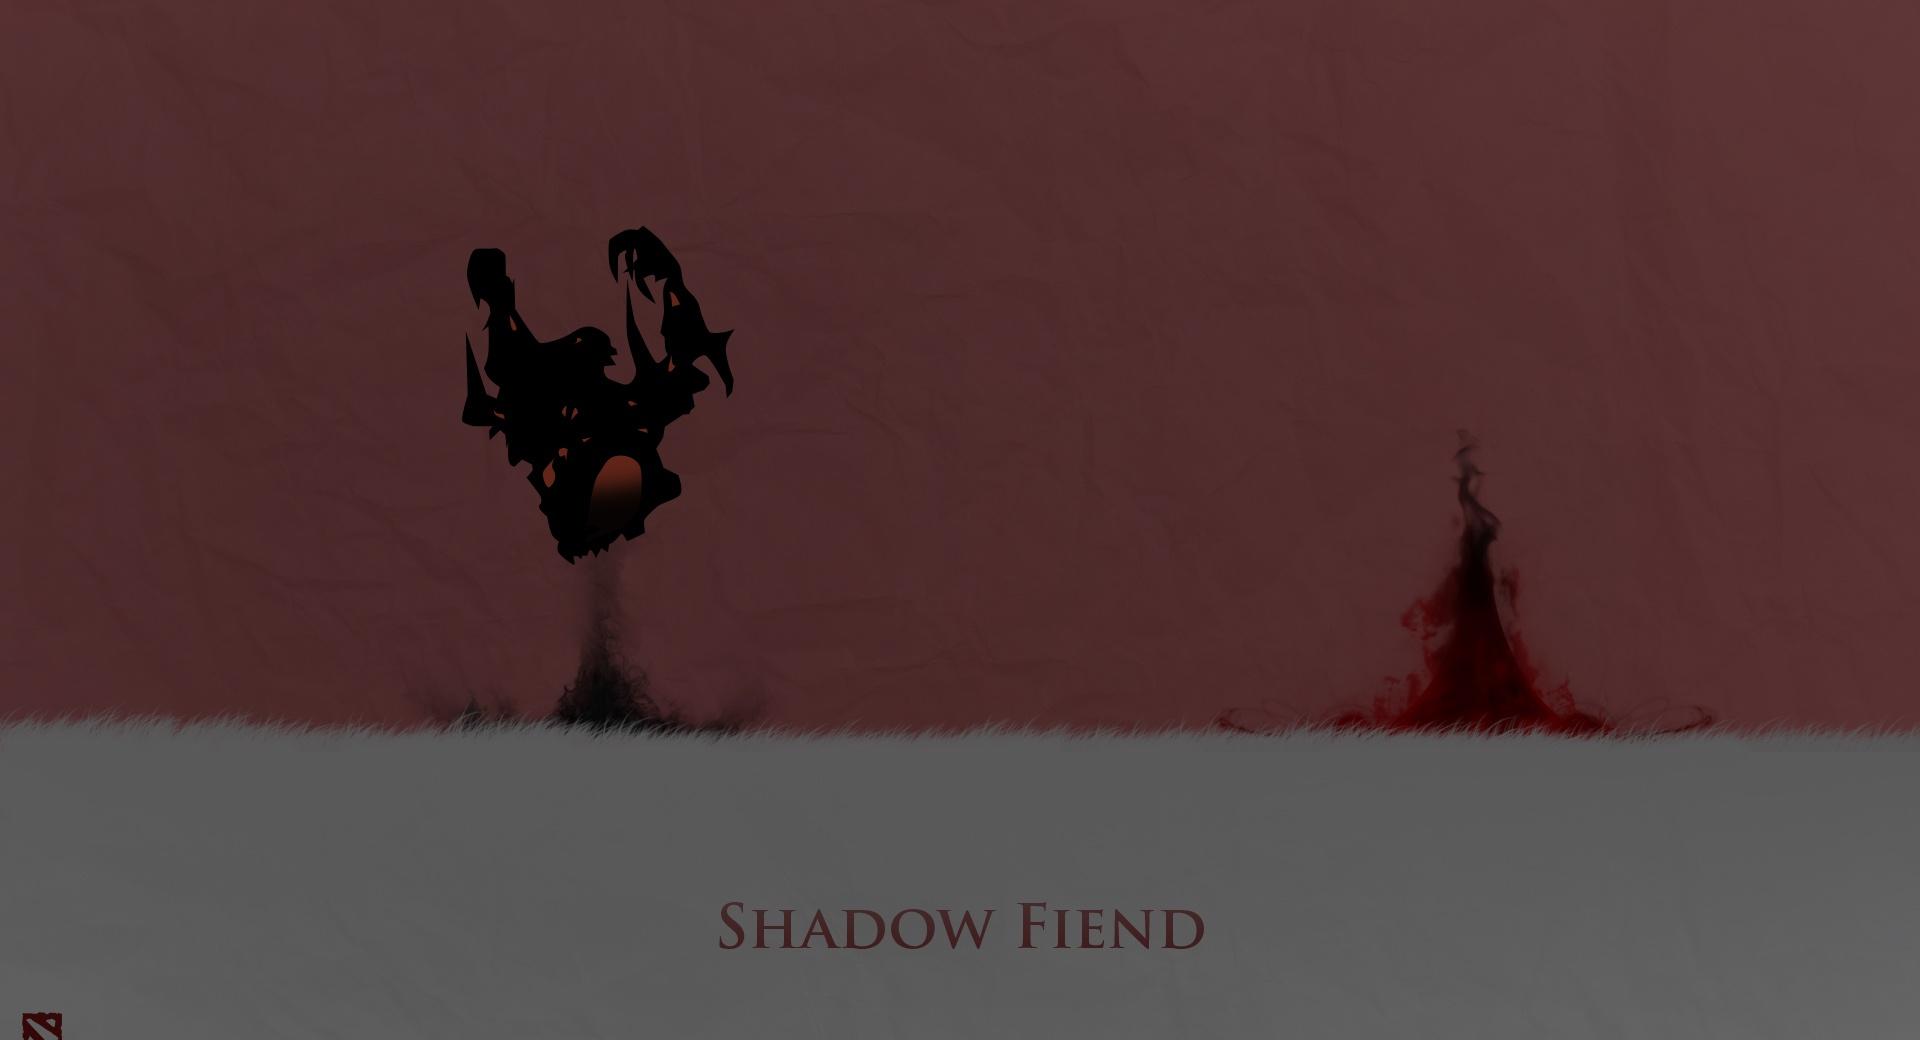 Shadow Fiend - DotA 2 at 1024 x 1024 iPad size wallpapers HD quality